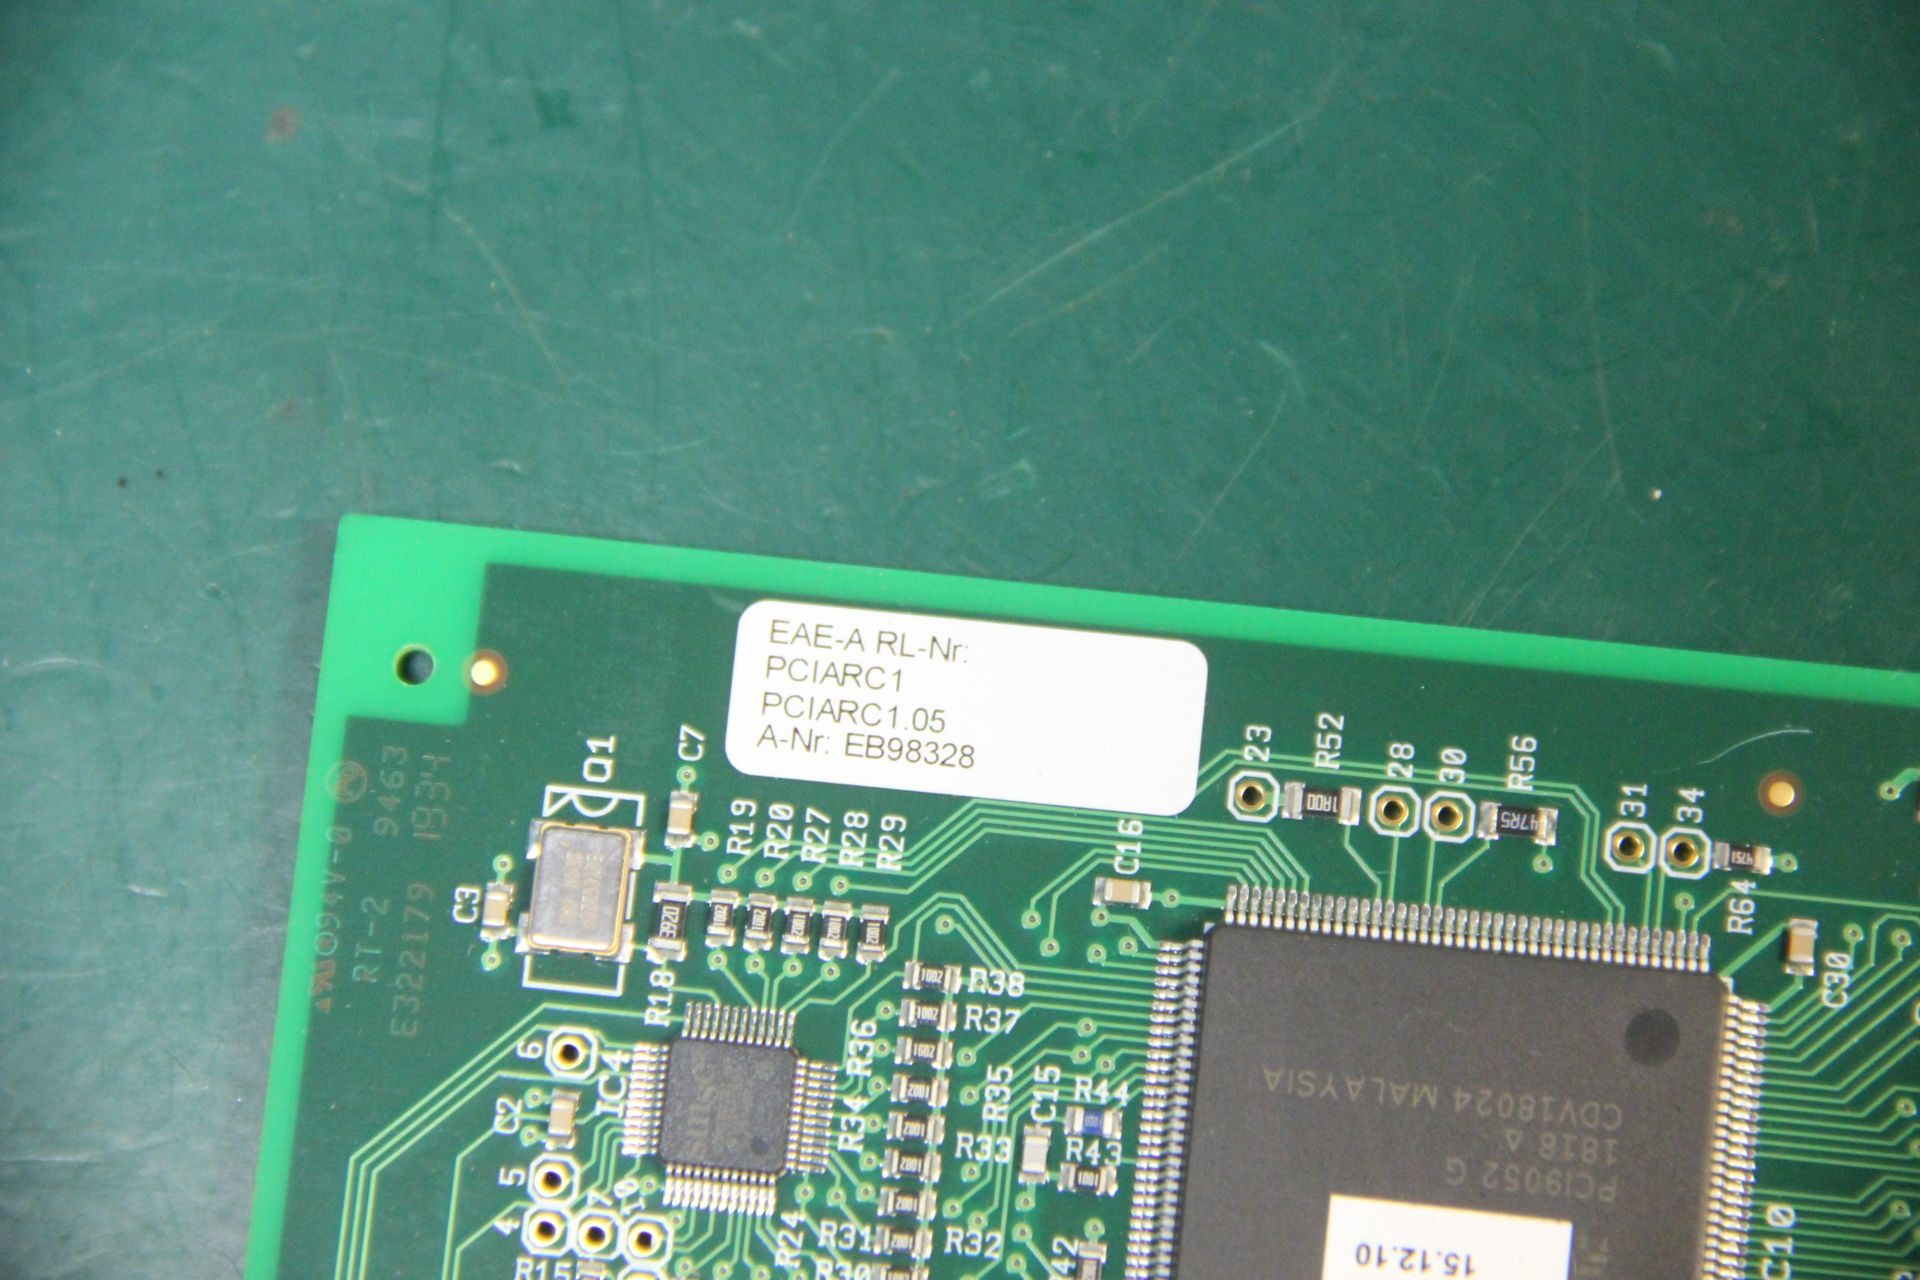 EAE INTERFACE CARD PCIARC2 - Image 2 of 4